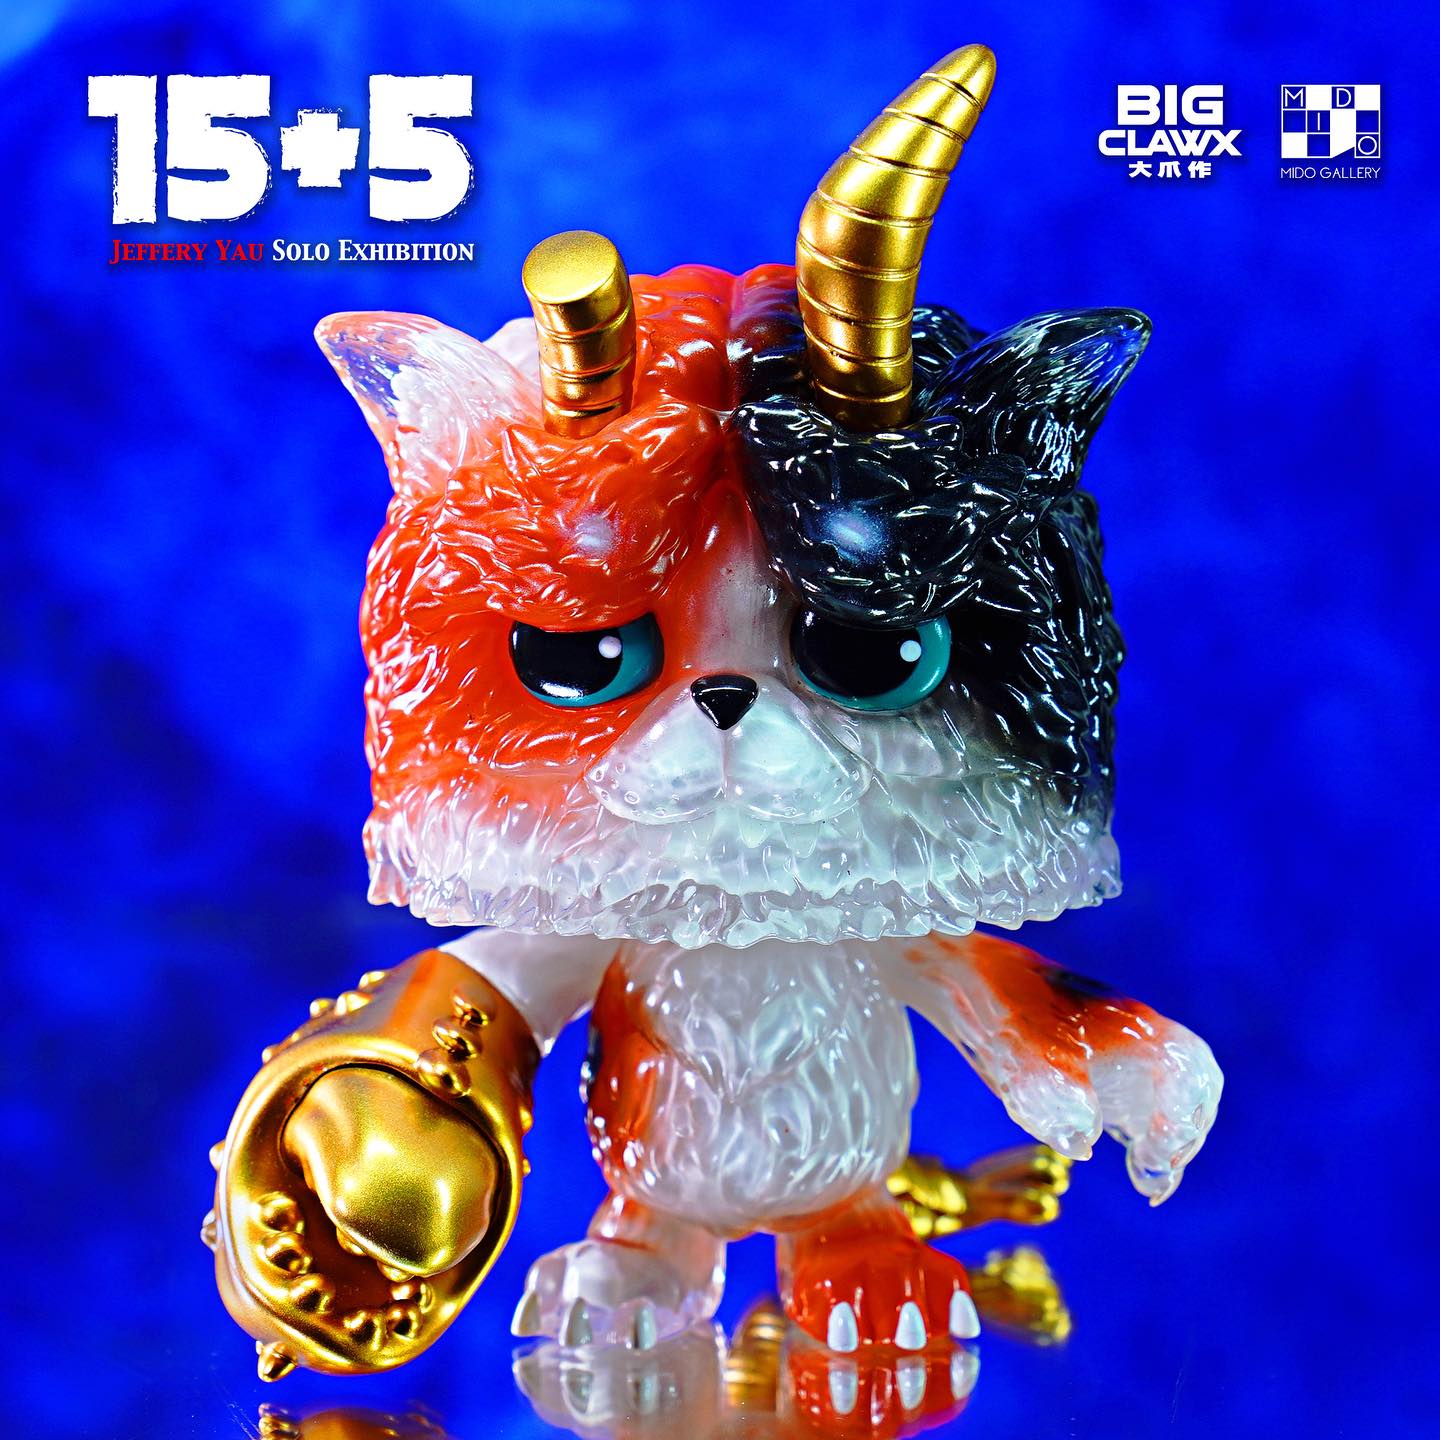 Bigclawx - 15+5 “Koi Limited Edition” 